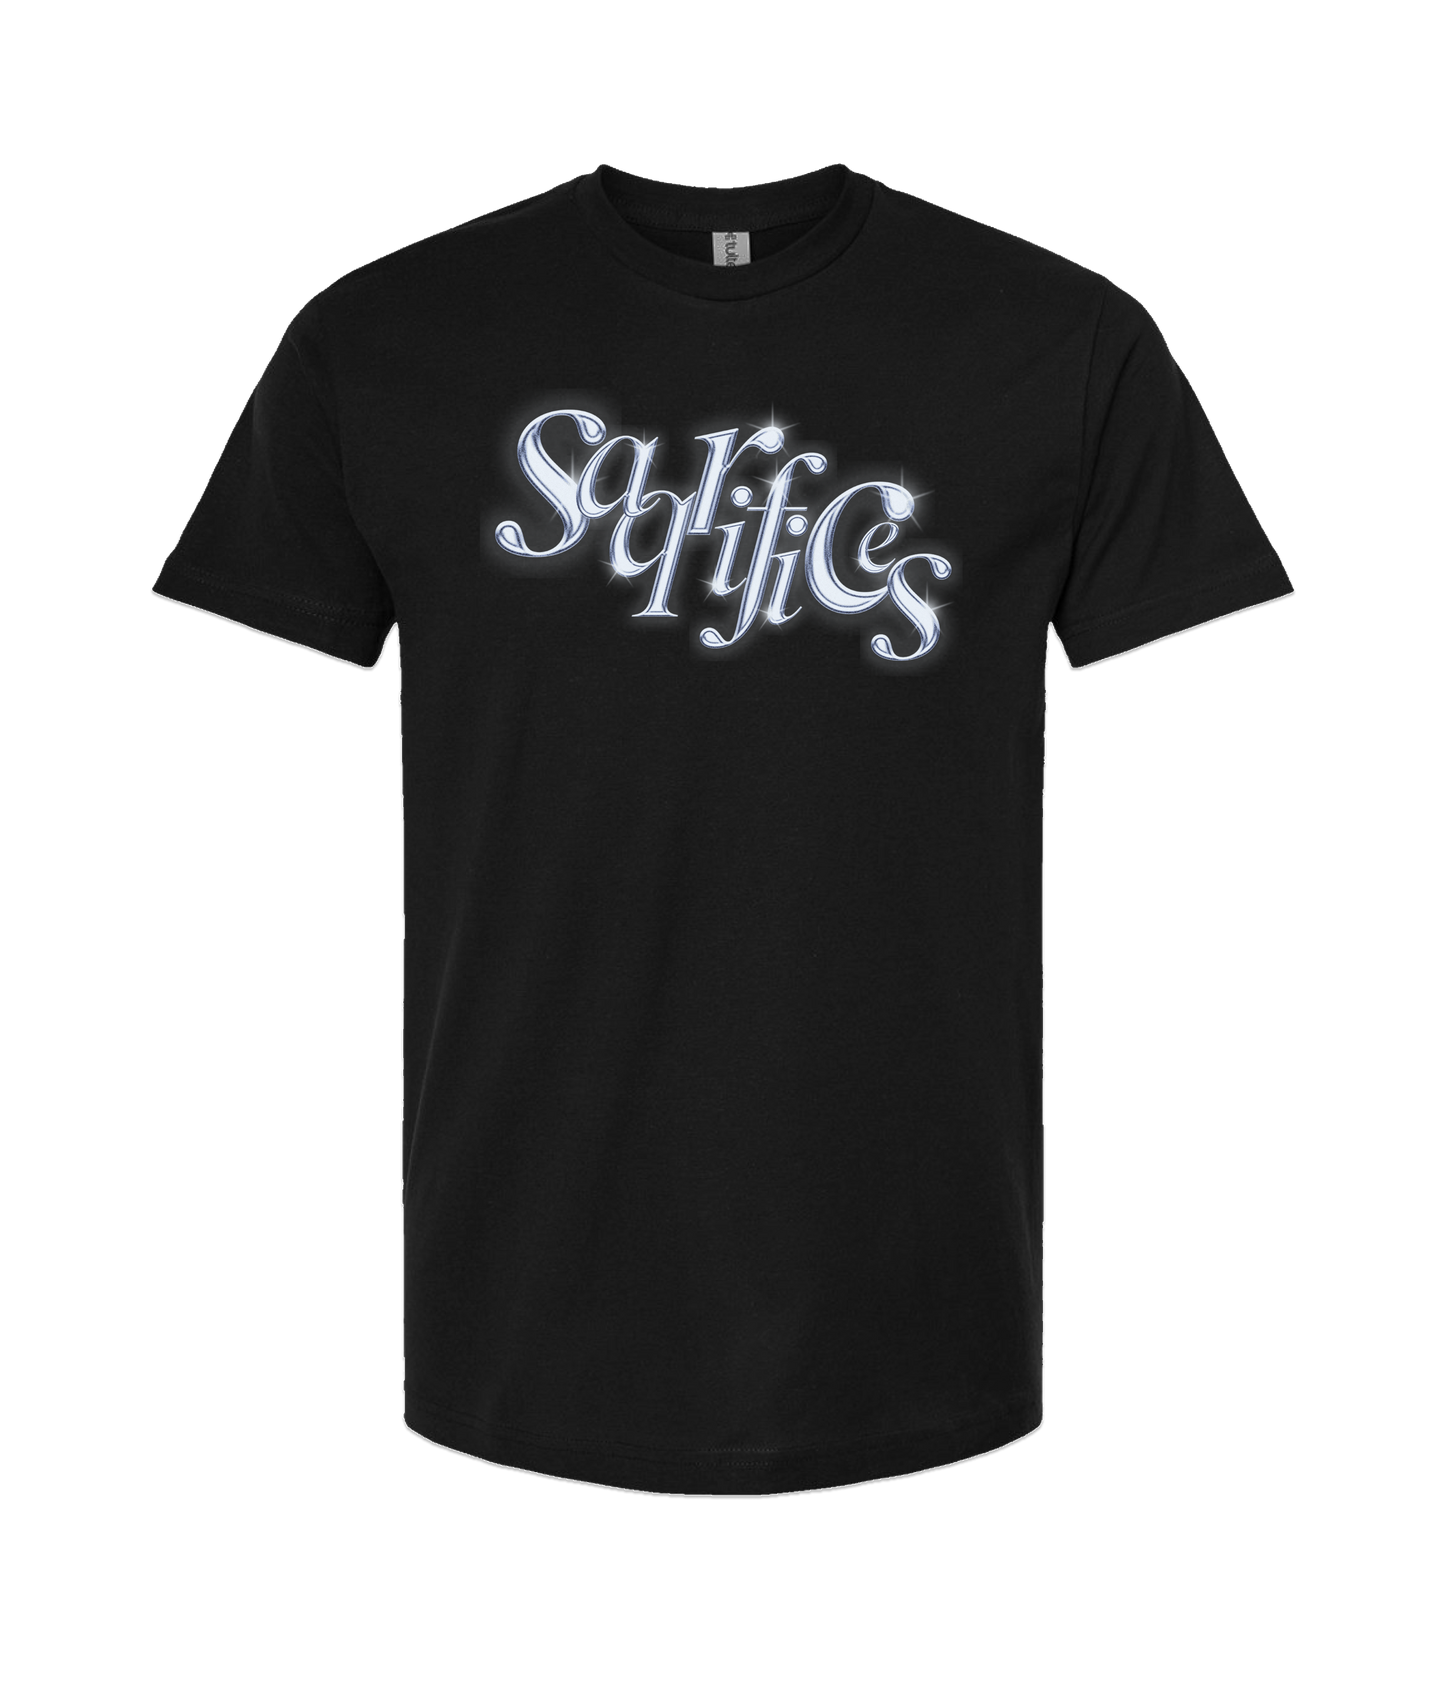 SAQRIFICES - Logo - Black T-Shirt